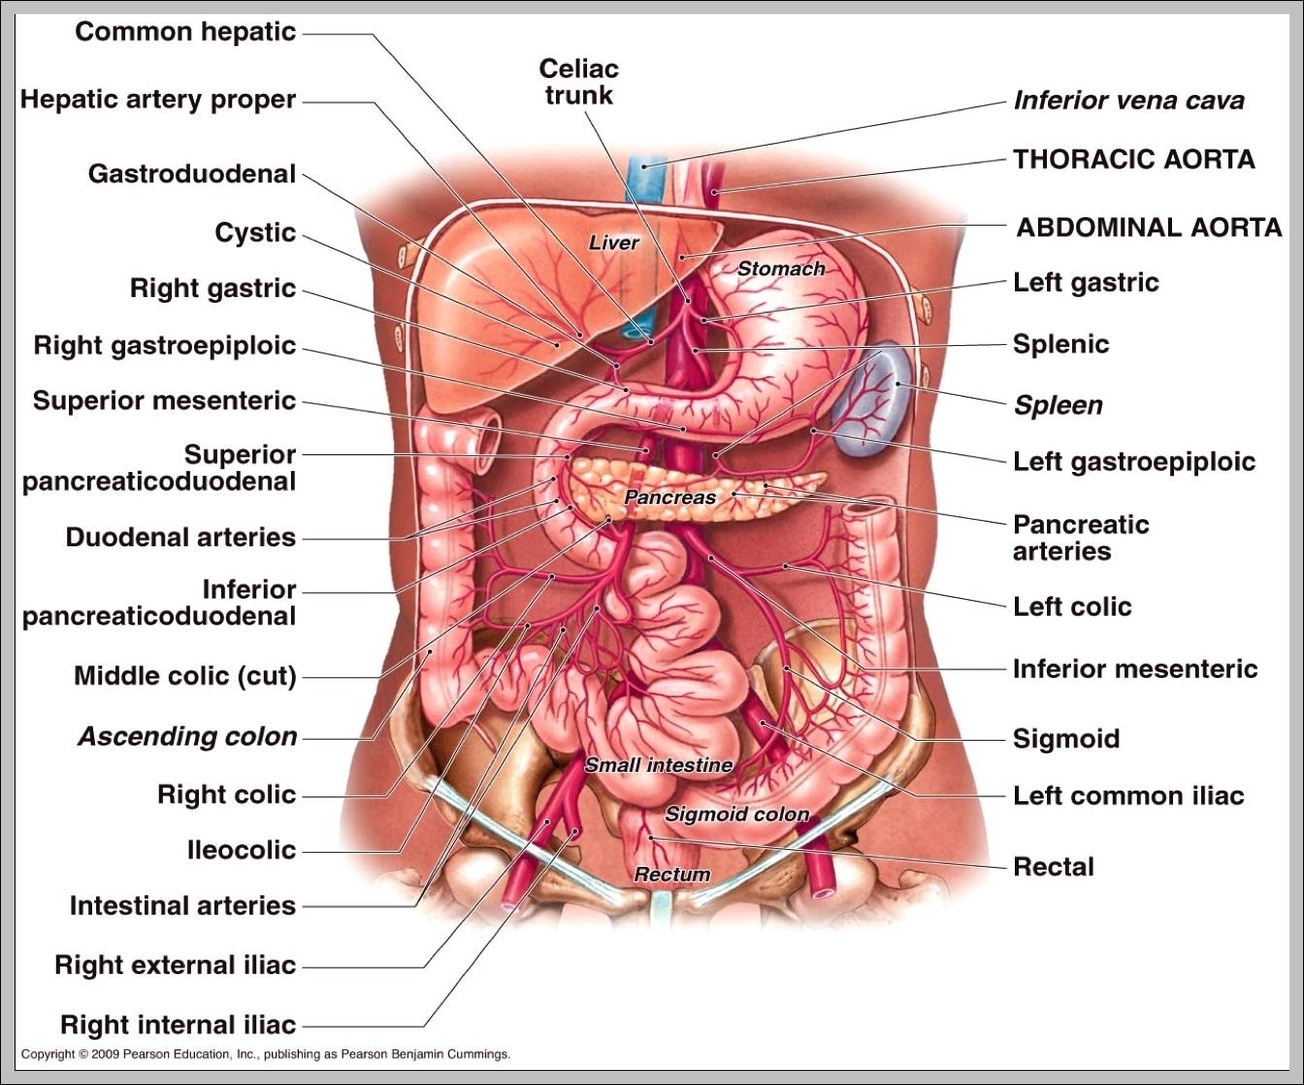 celiac artery function